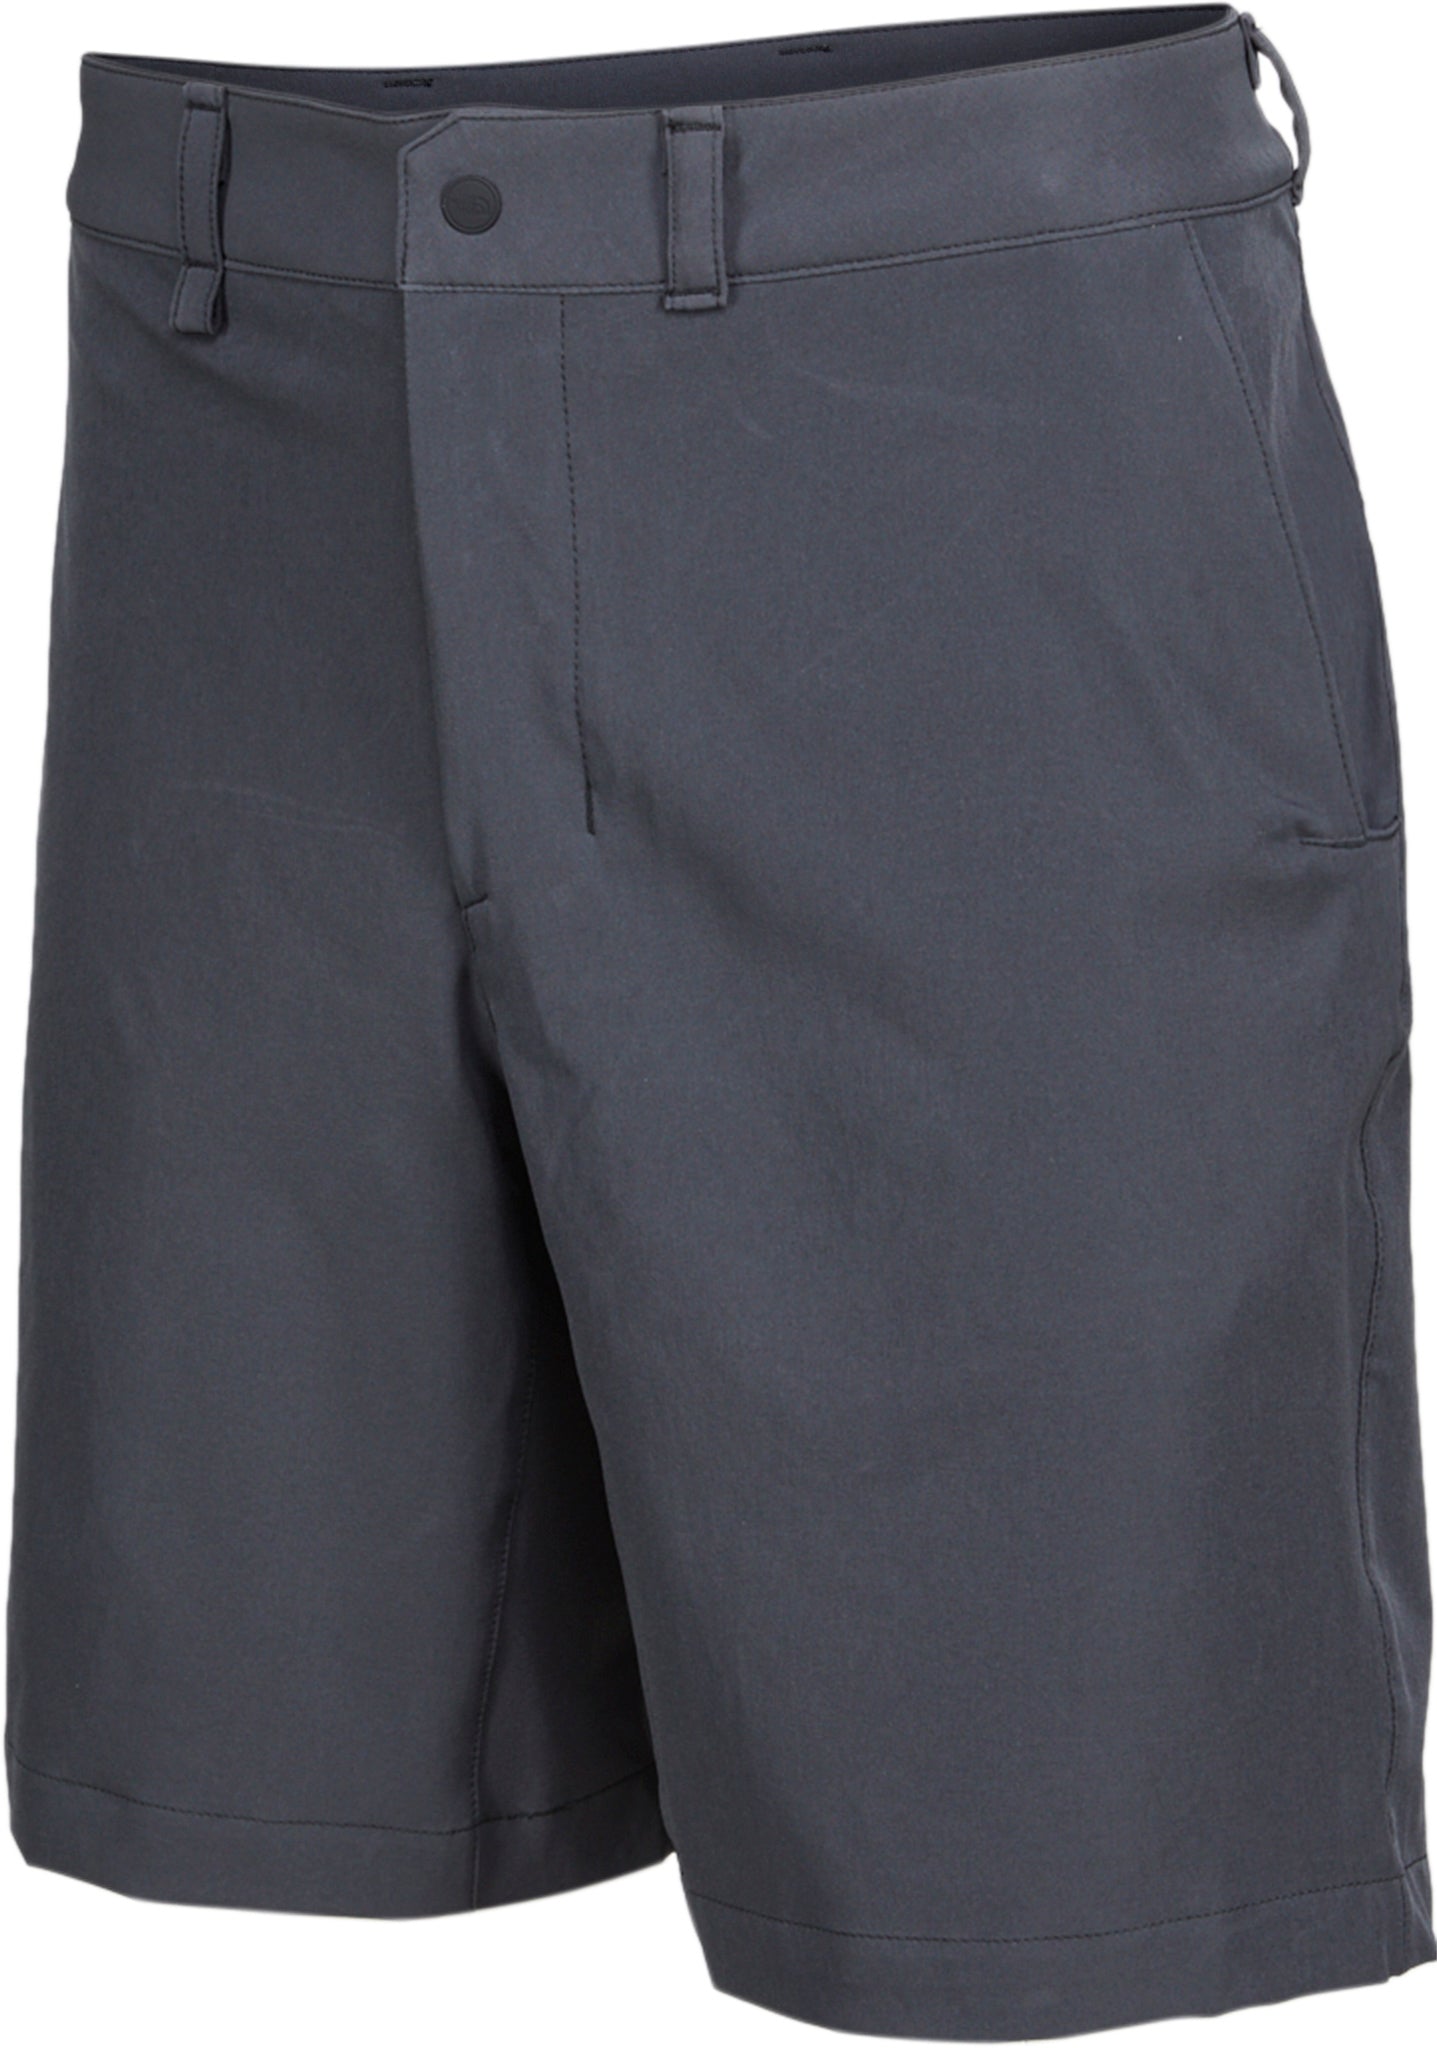 THE NORTH FACE Paramount Men's Shorts Grey (Size: 34)